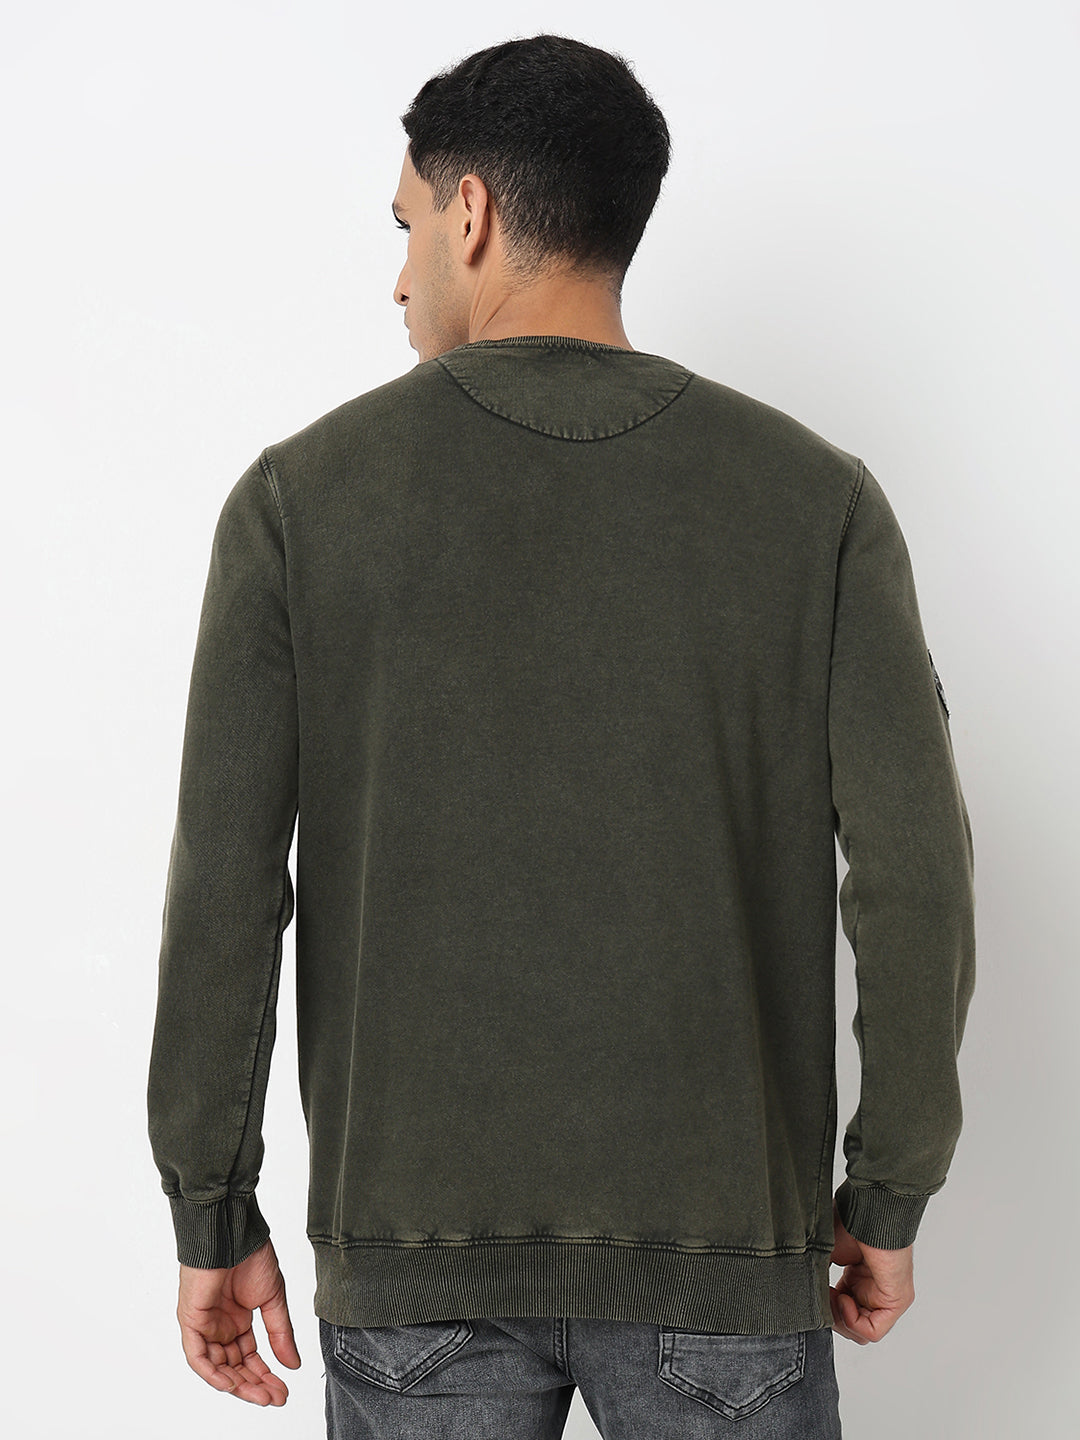 Spykar Round Neck Full Sleeves Green Sweatshirt For Men